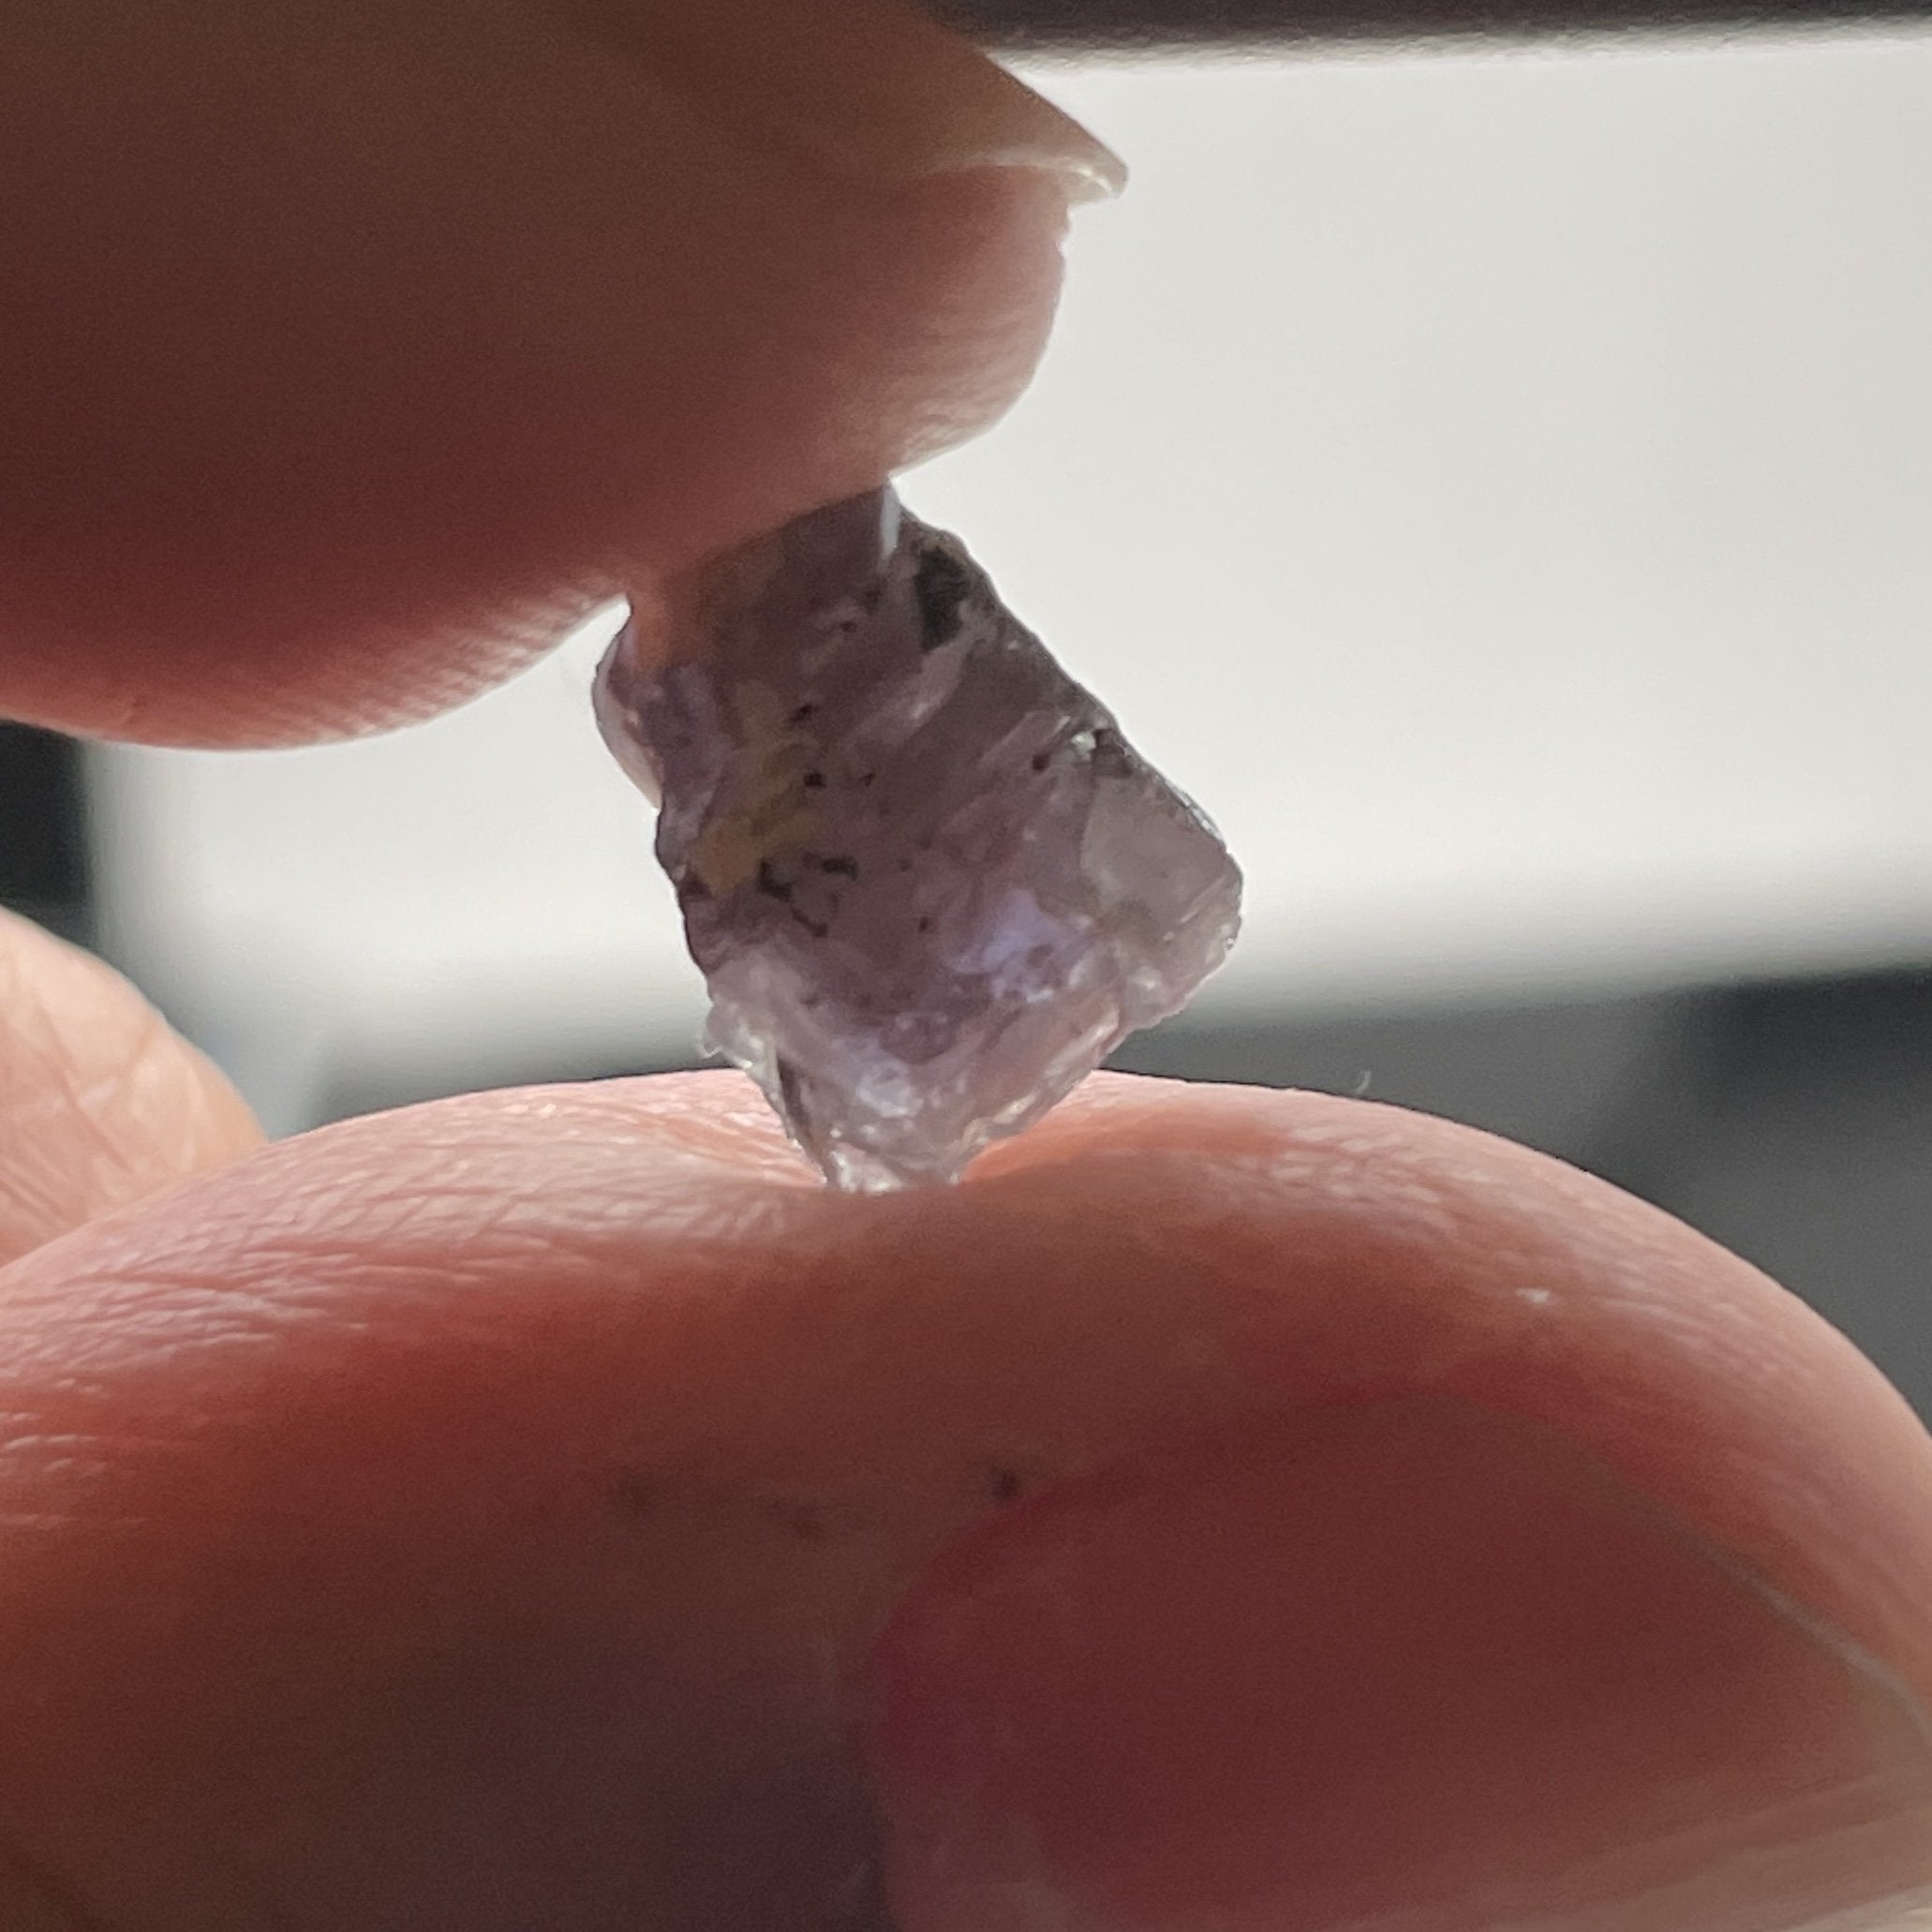 2.85Ct Alexandrite Crystal Tanzania Untreated Unheated. 9.6 X 7 3.3Mm